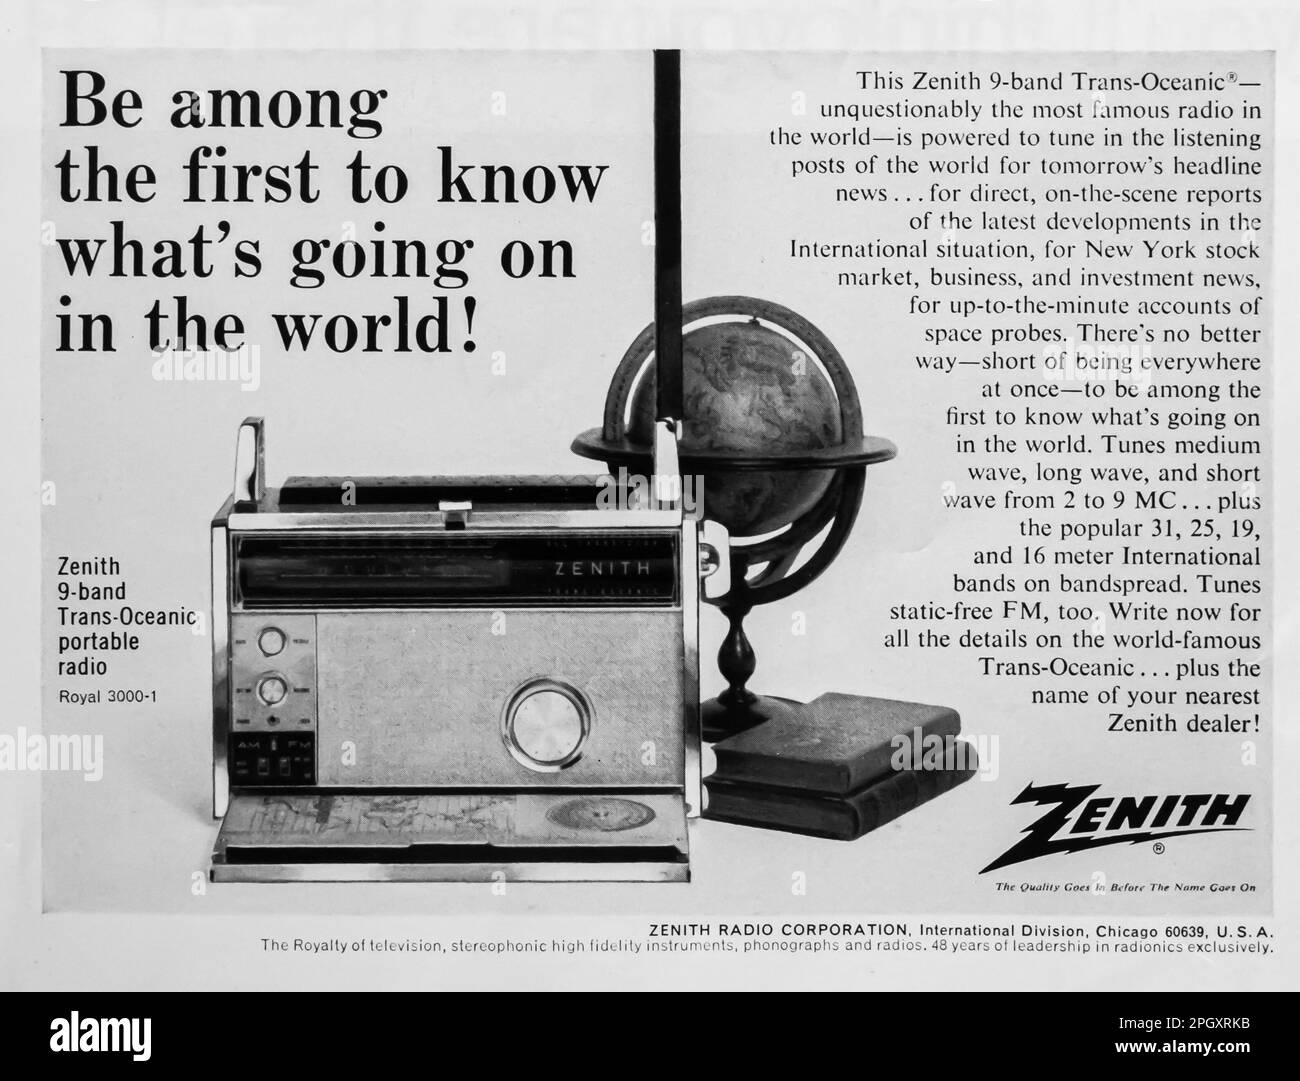 Zenith portable radio advert in a Natgeo magazine, 1966 Stock Photo